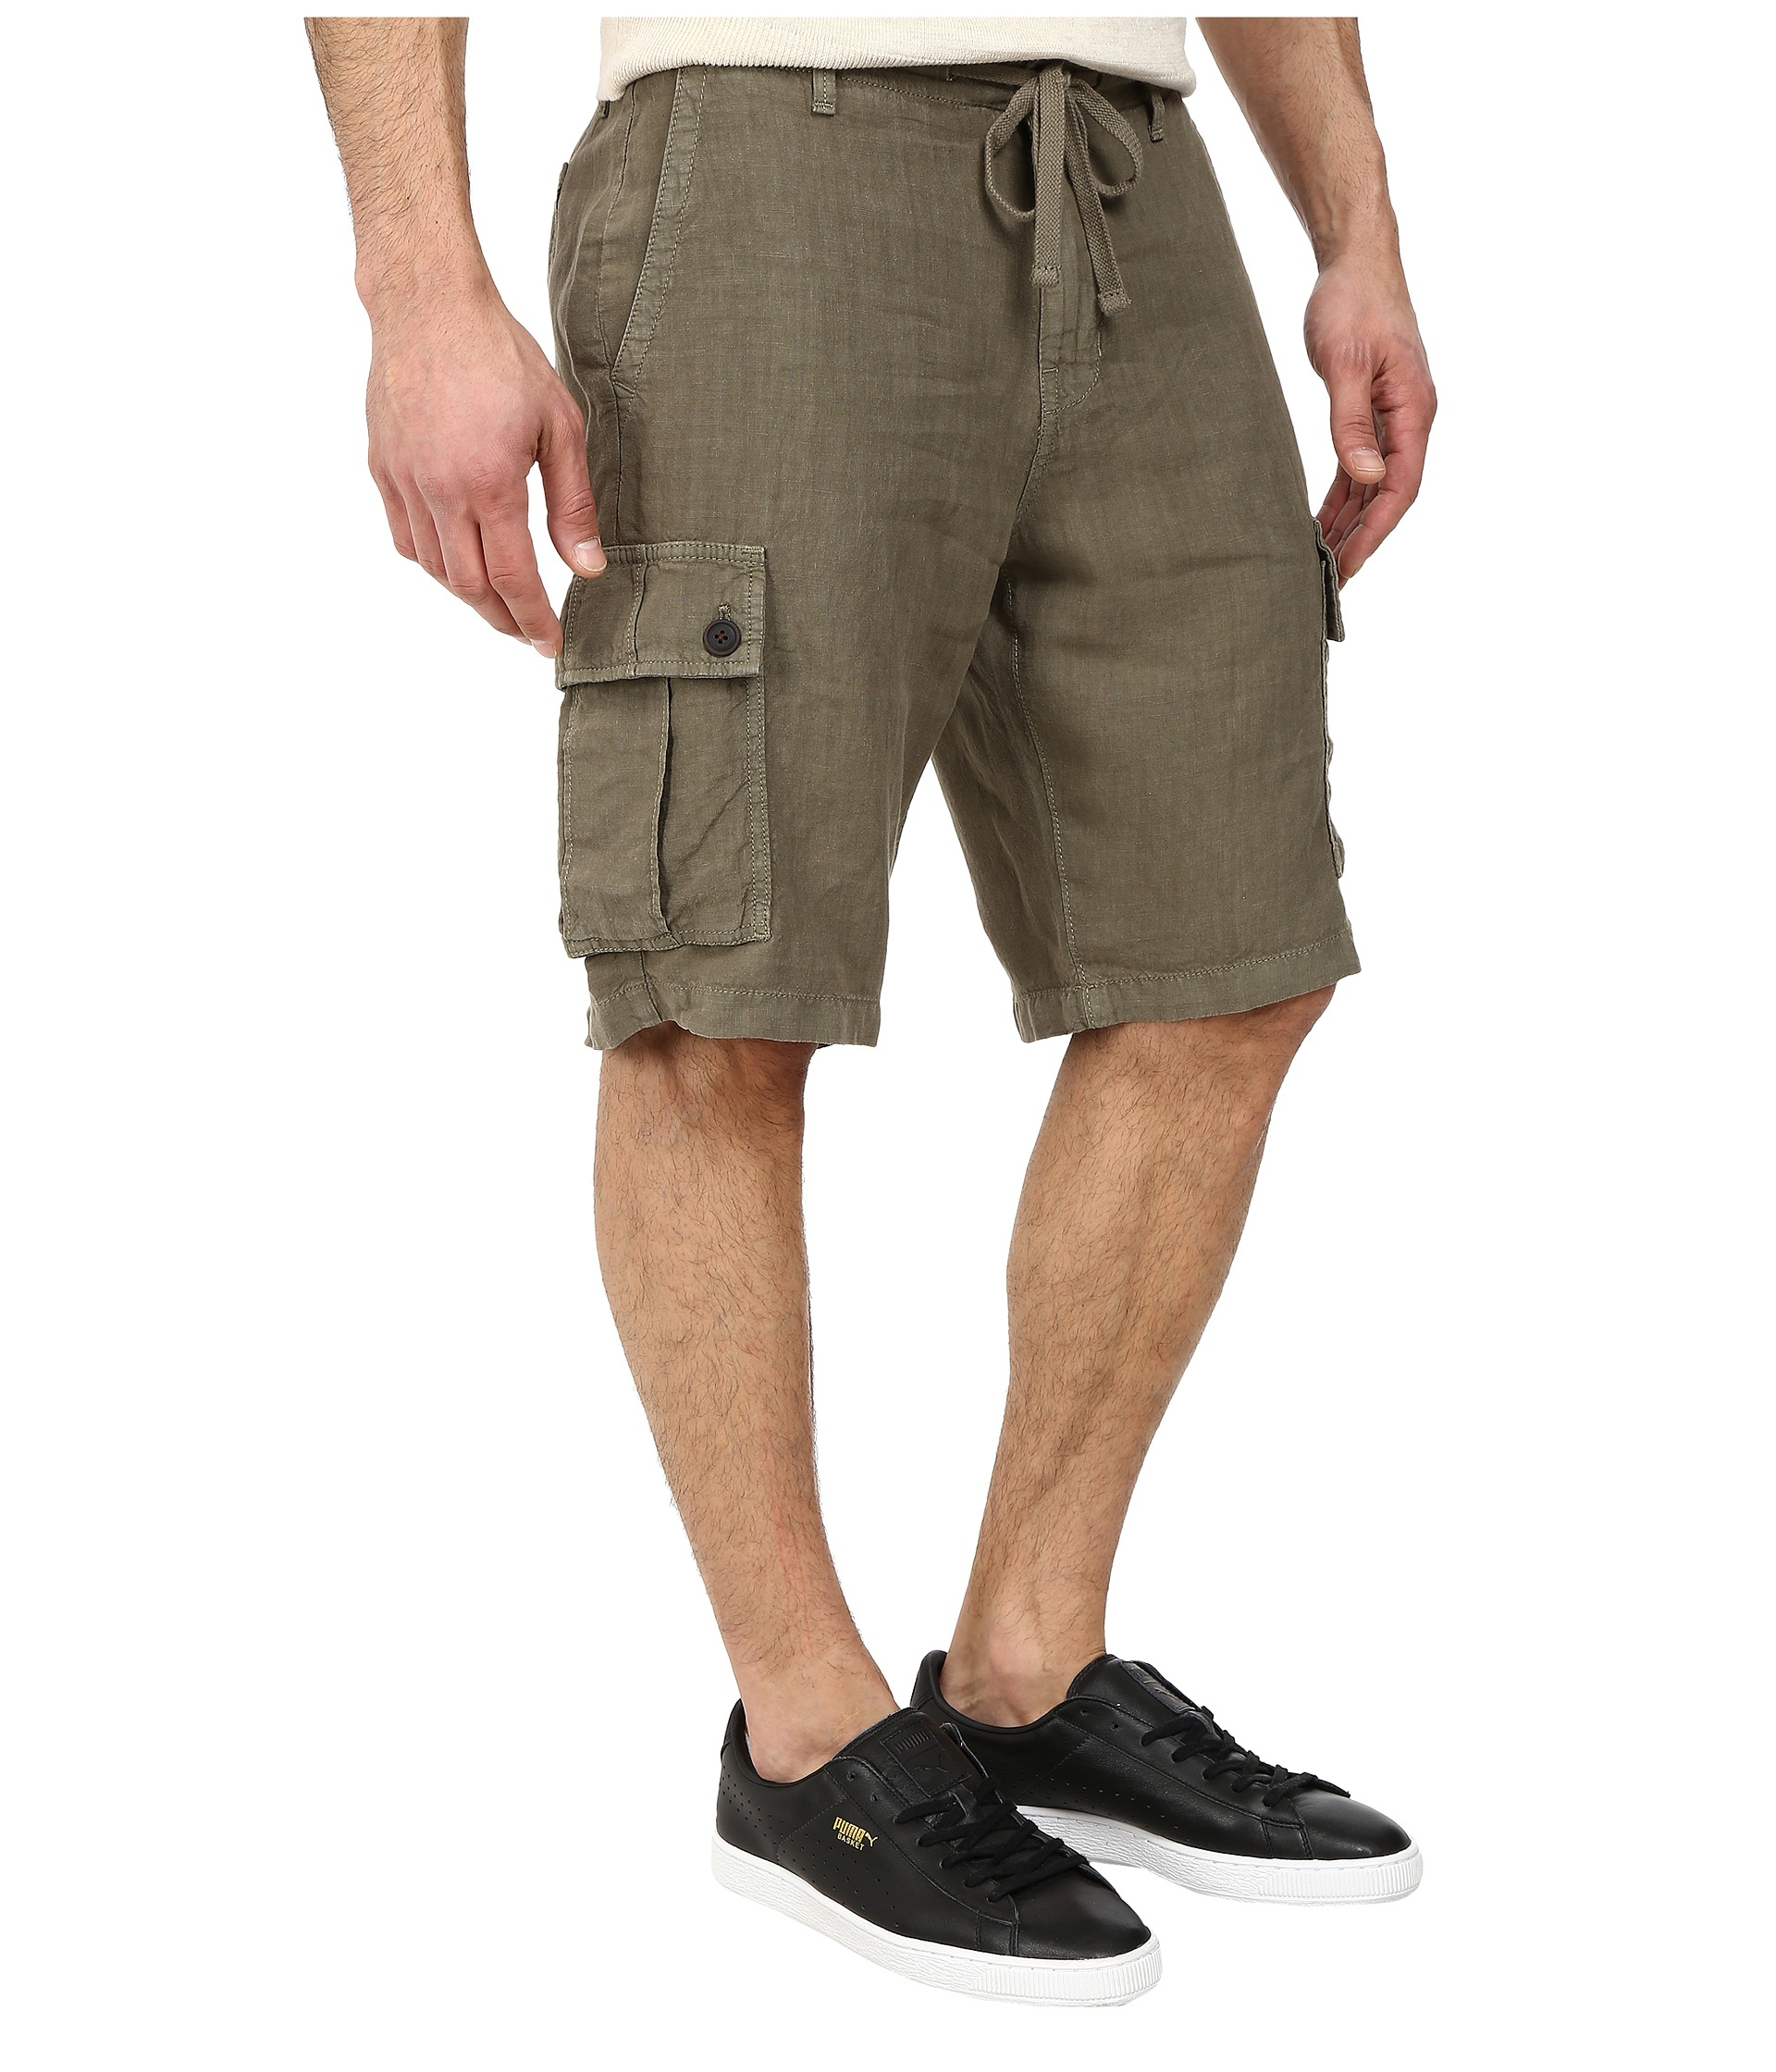 Lucky Brand Newport Linen Cargo Shorts in Natural for Men - Lyst